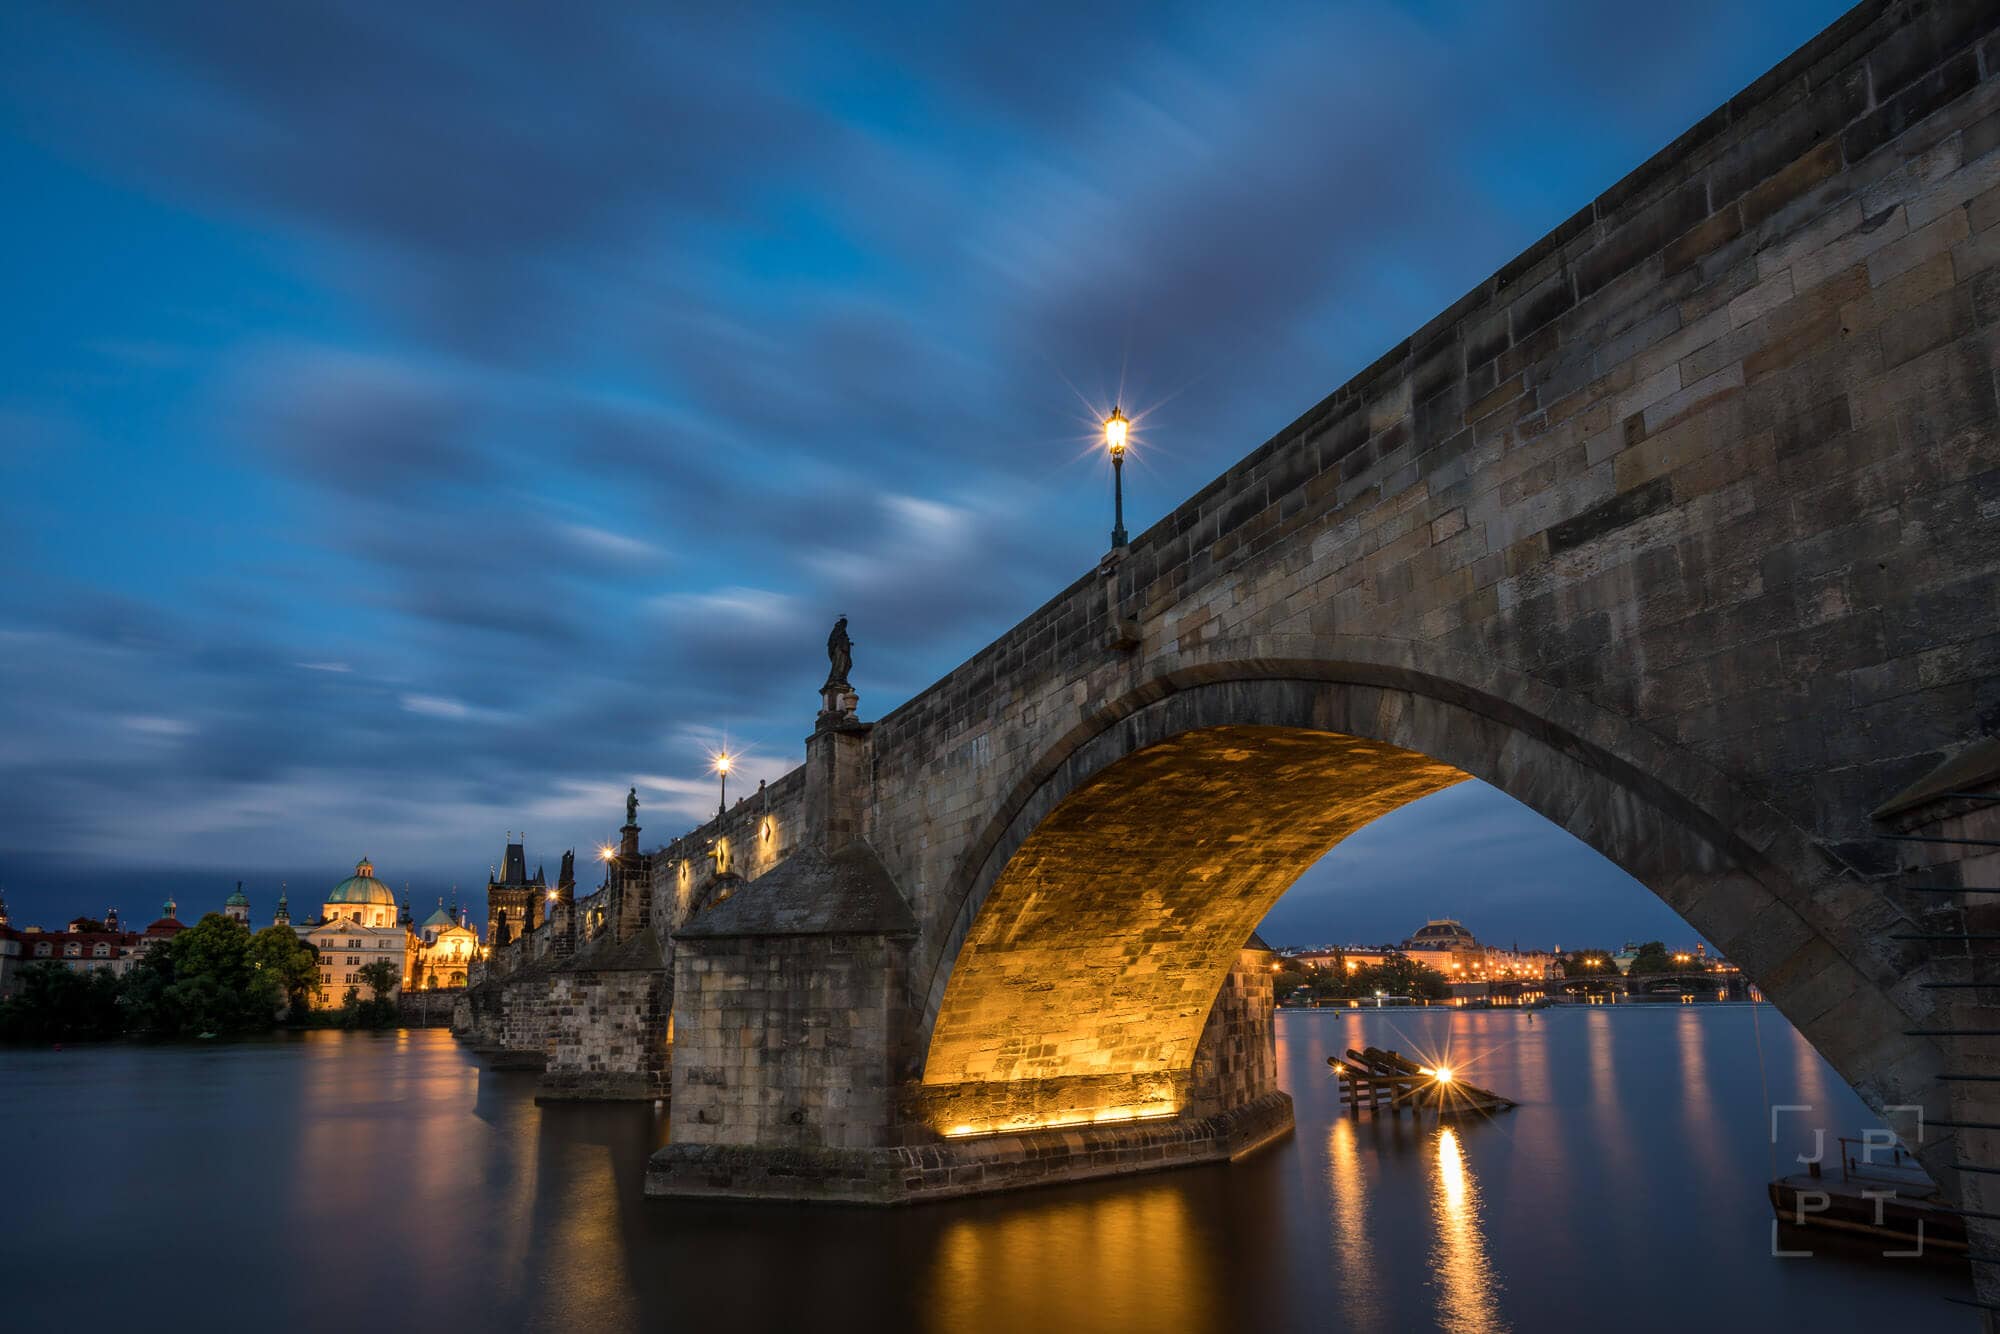 Illuminated arch of Charles bridge, Prague